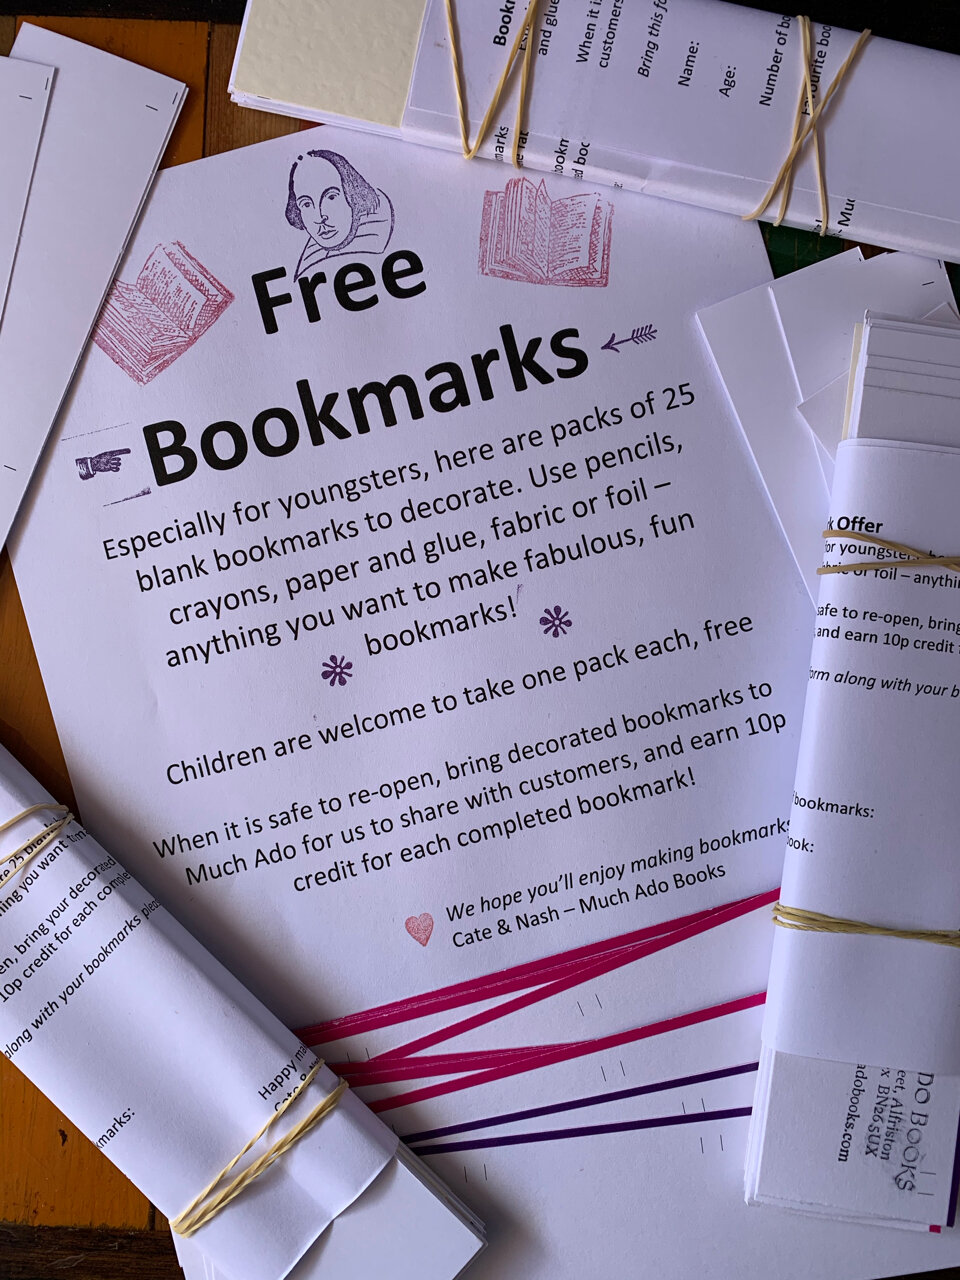 Free bookmarks.jpg